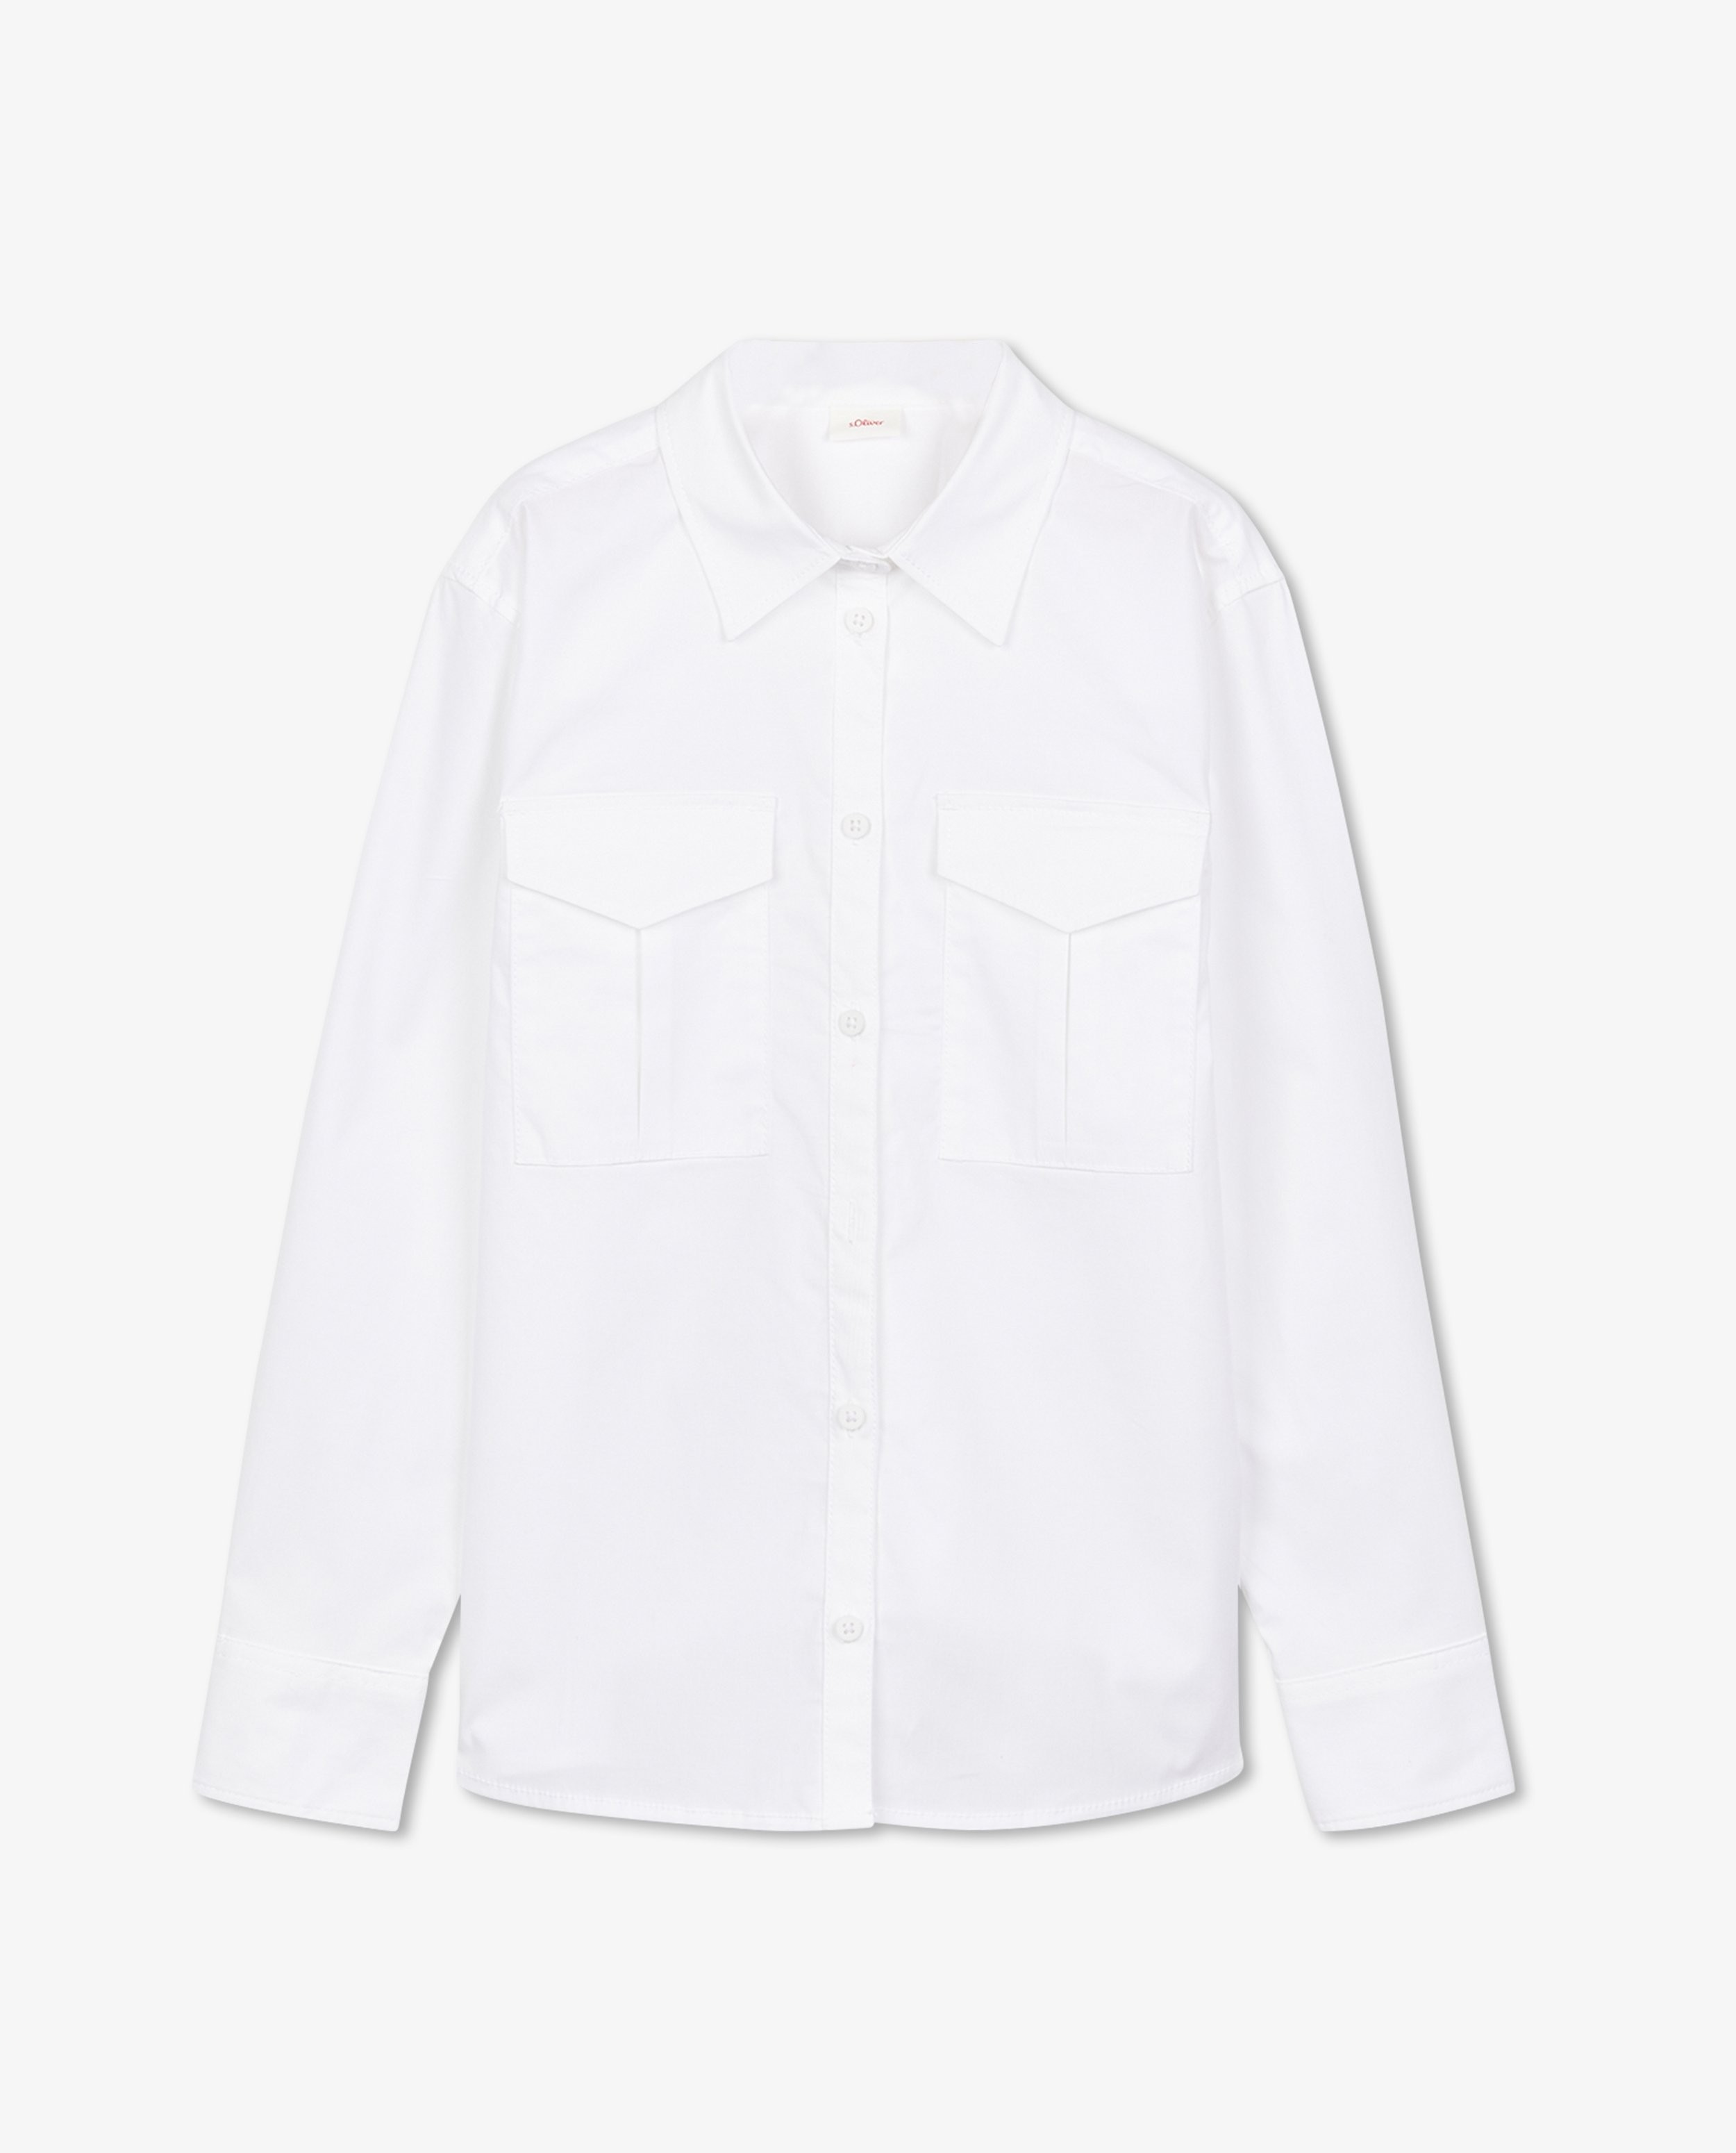 Wit hemd met borstzakken - null - S. Oliver